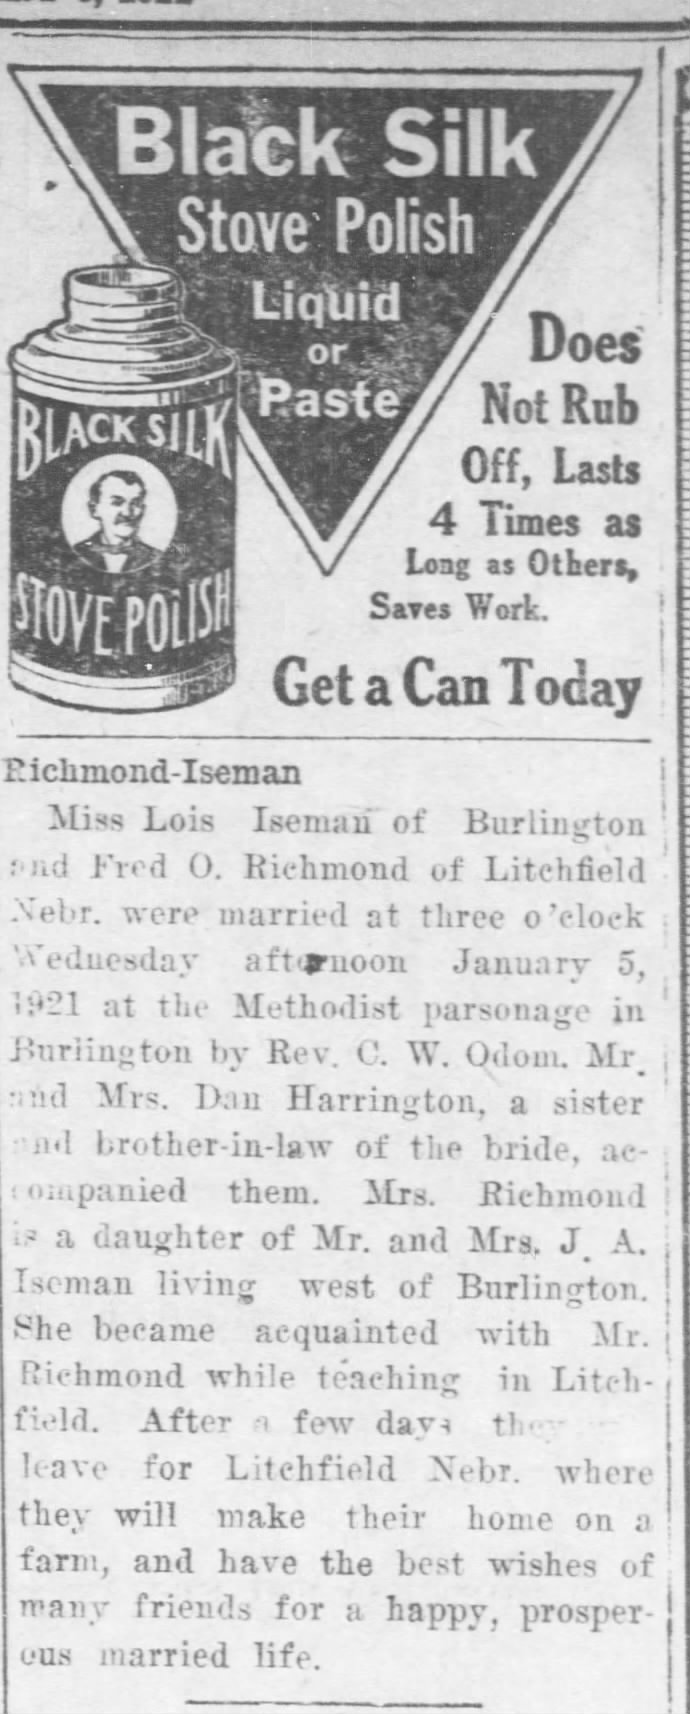 Marriage of Richmond-Iseman 1921